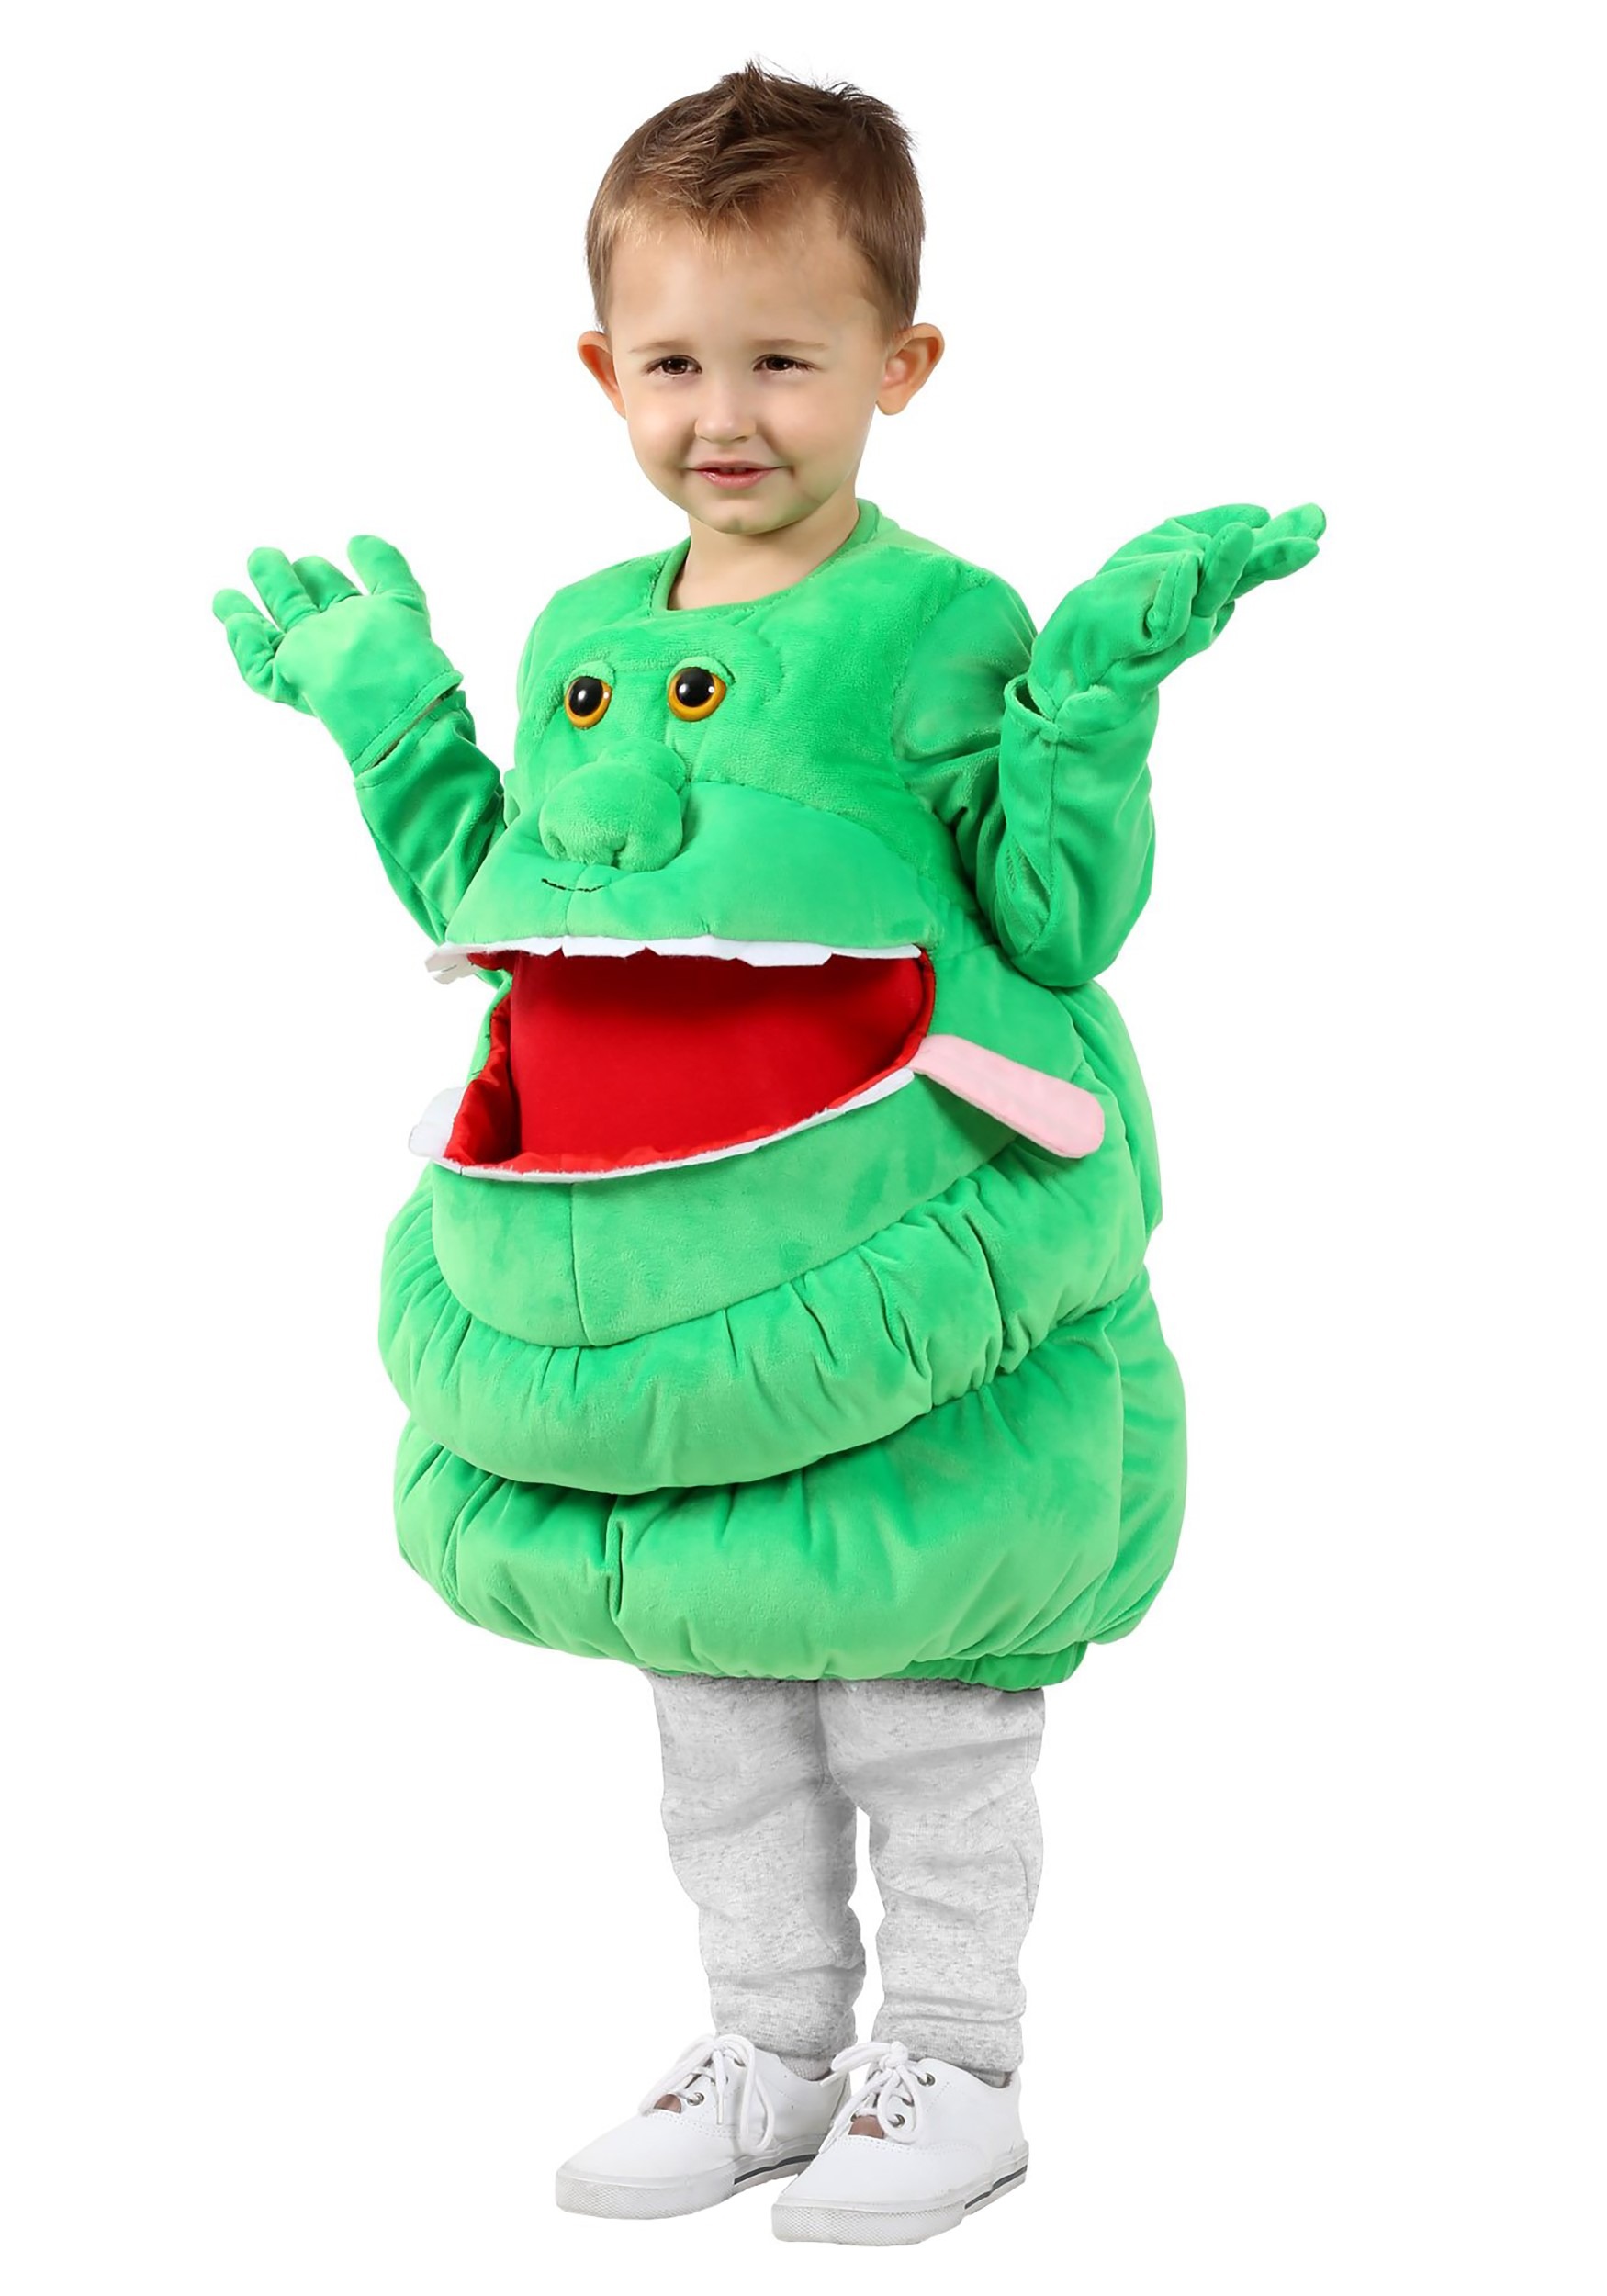 Ghostbusters Slimer Feed Me Kids Costume